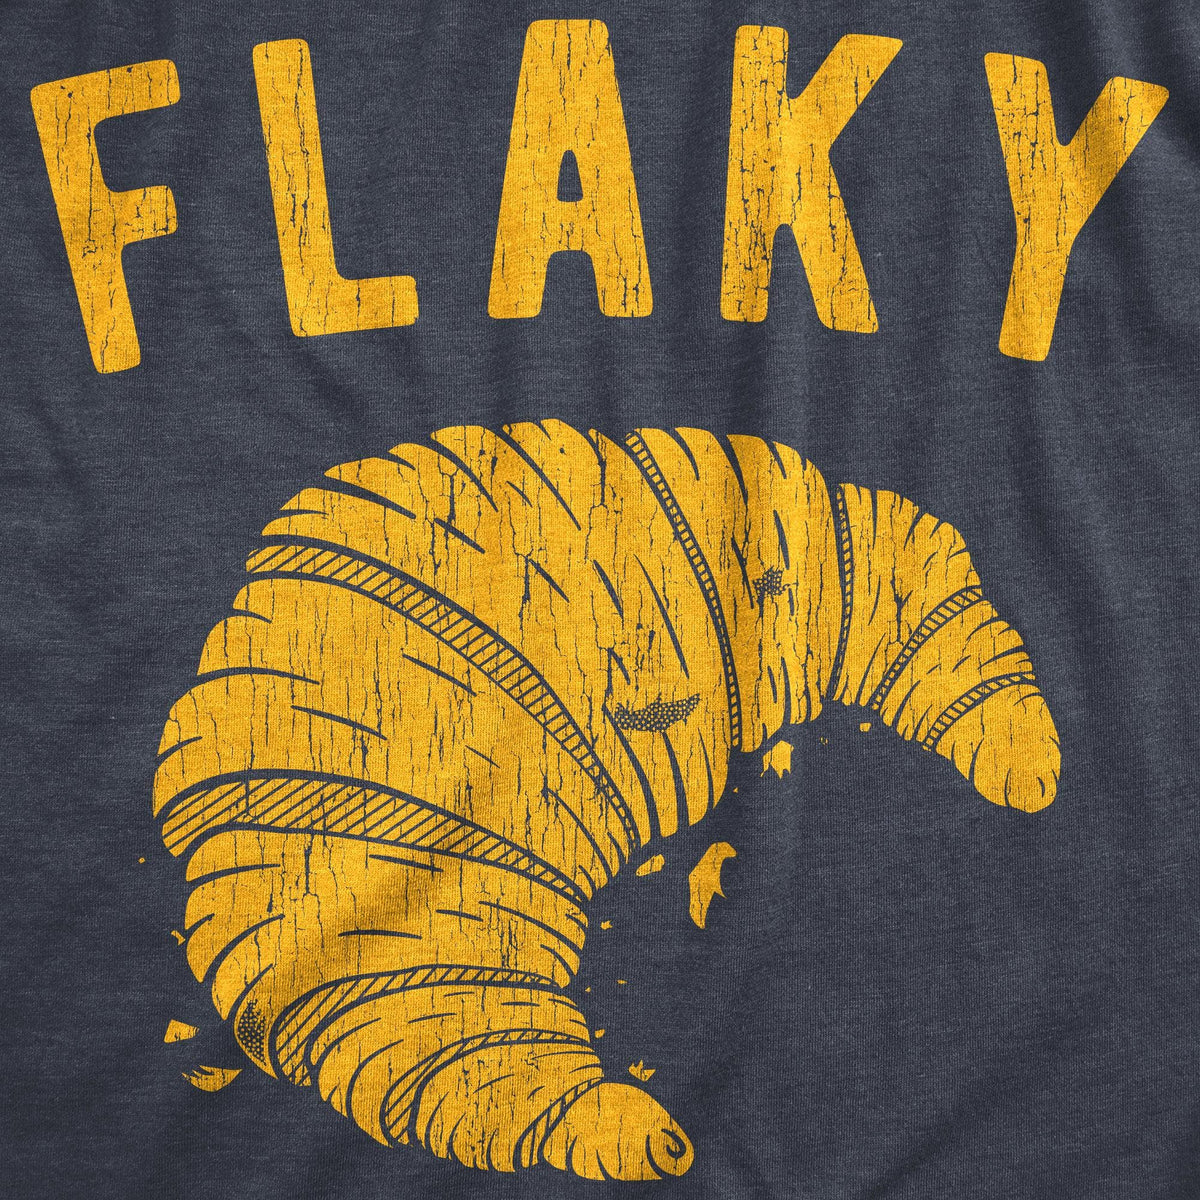 Flaky Women&#39;s Tshirt  -  Crazy Dog T-Shirts